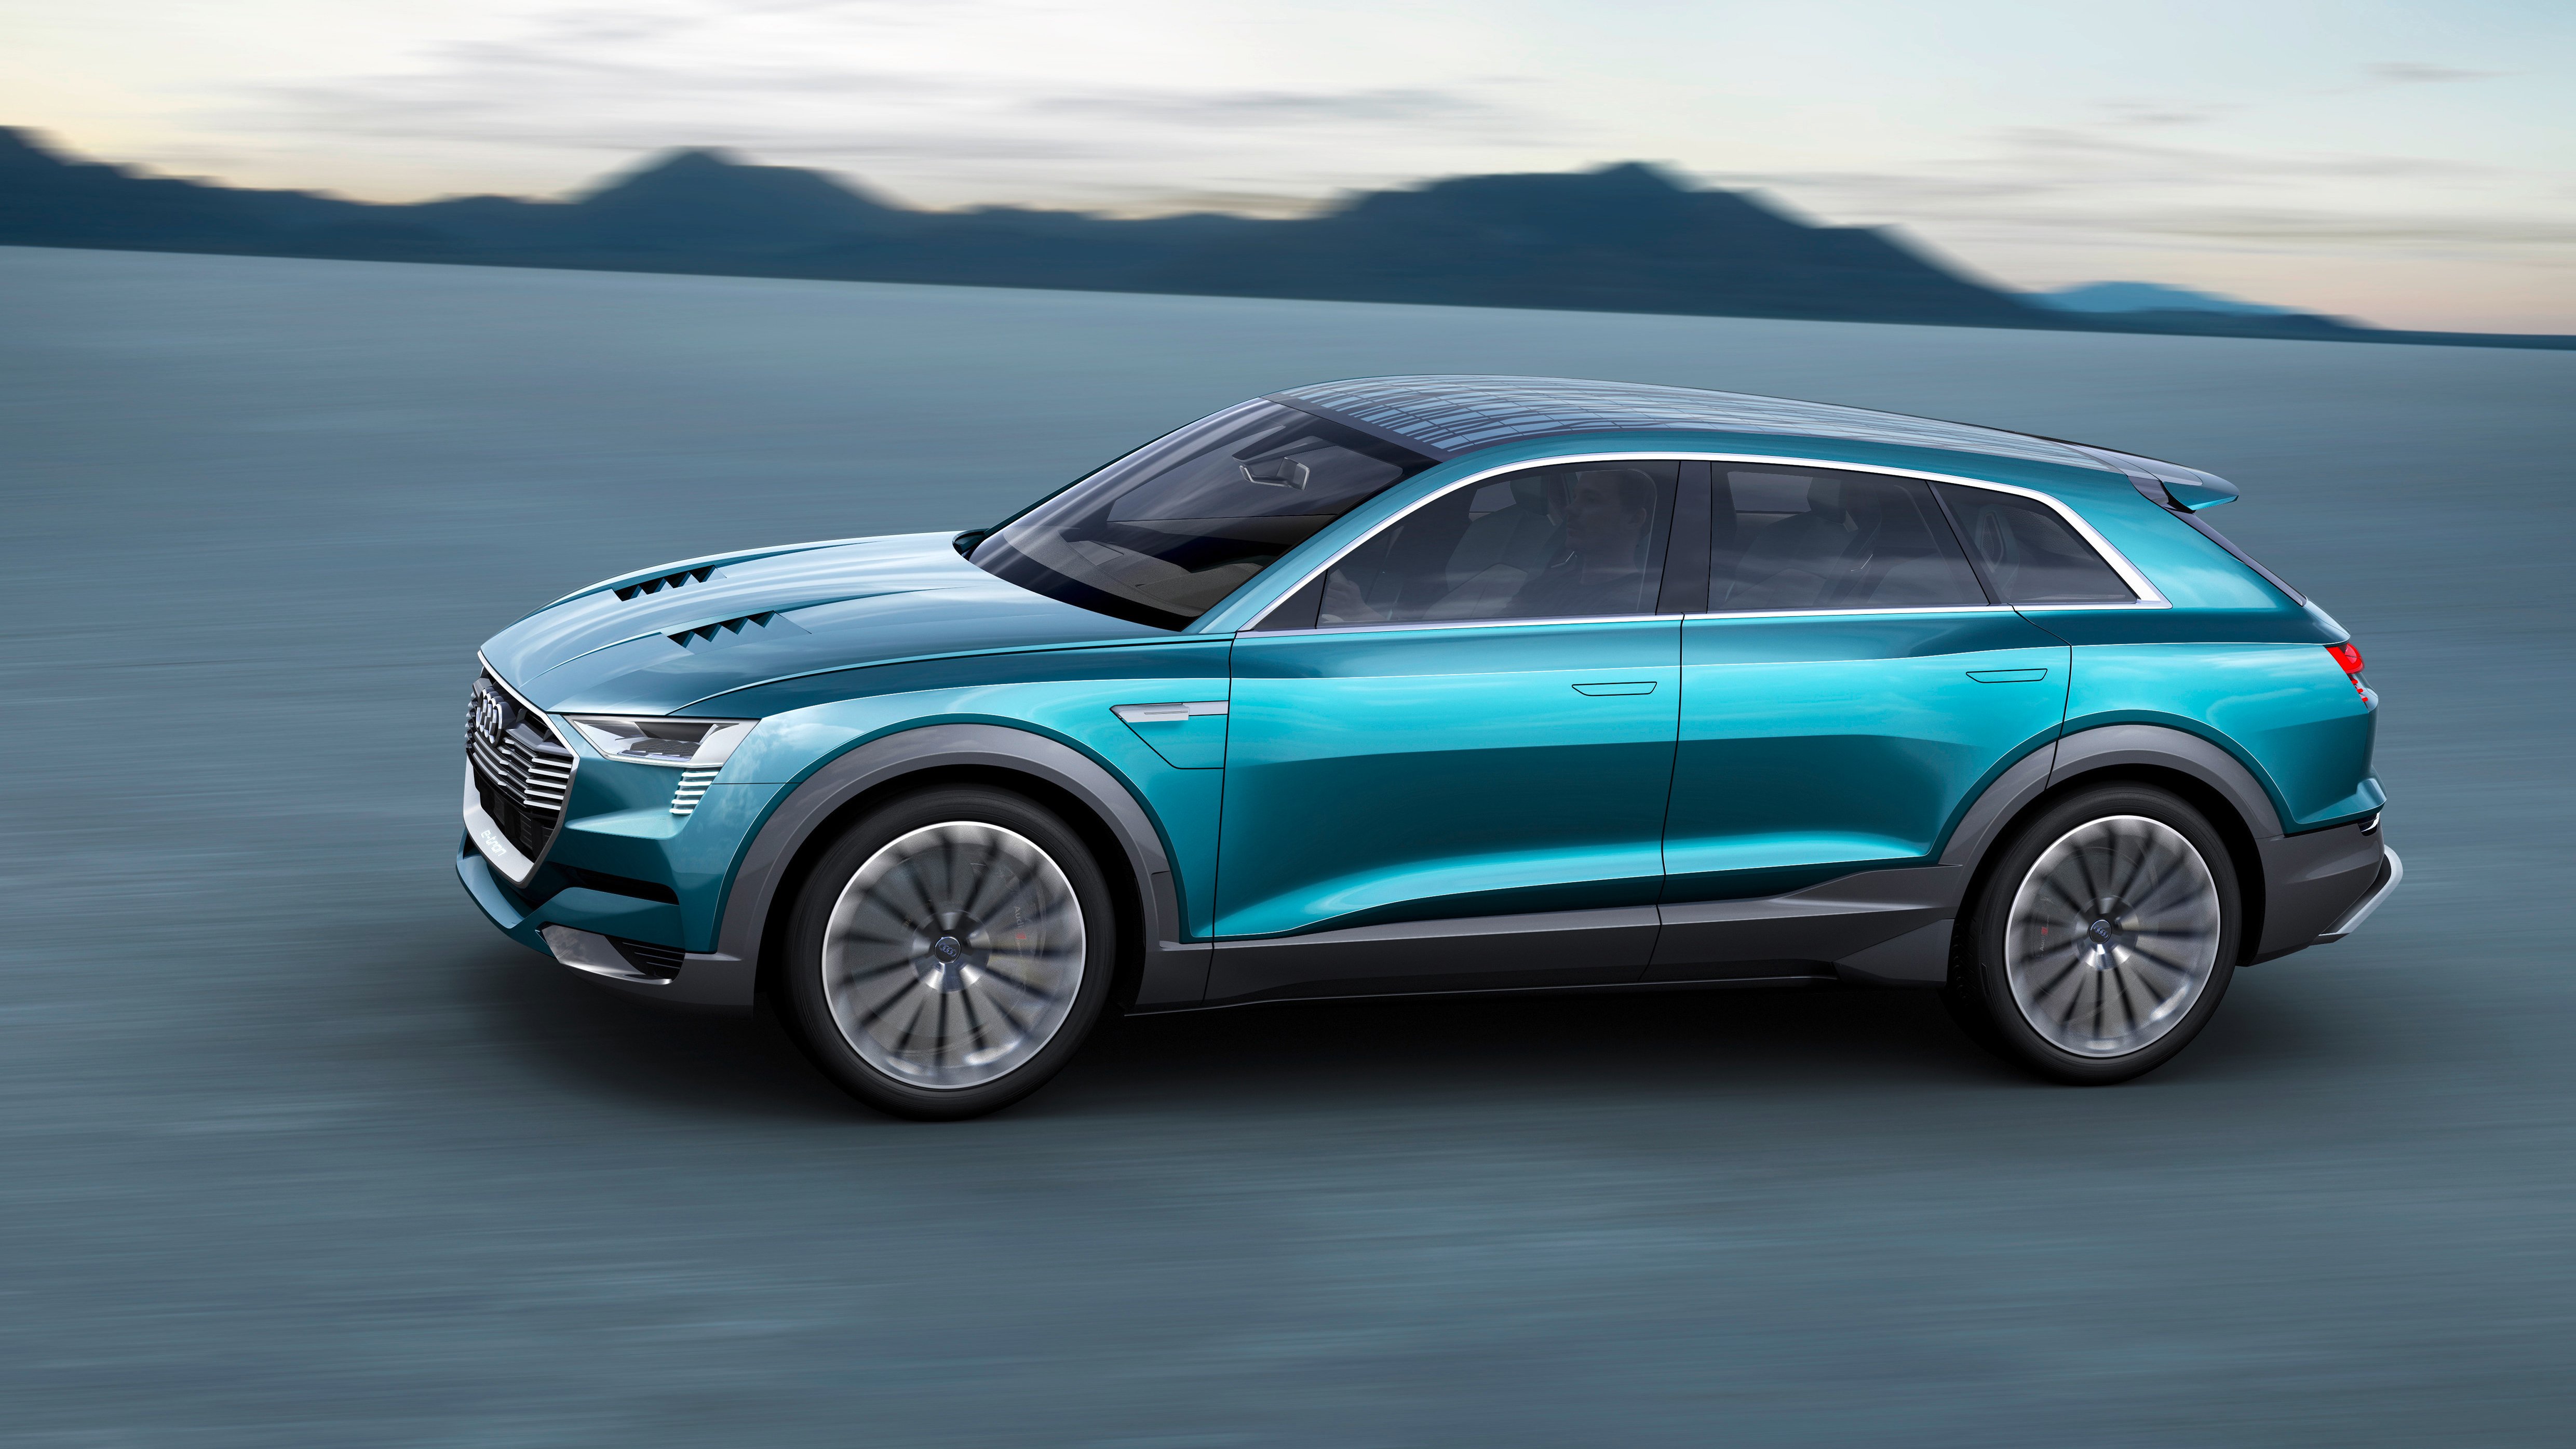 Audi’s etron quattro electric SUV 310 mile range, arrives in 2018